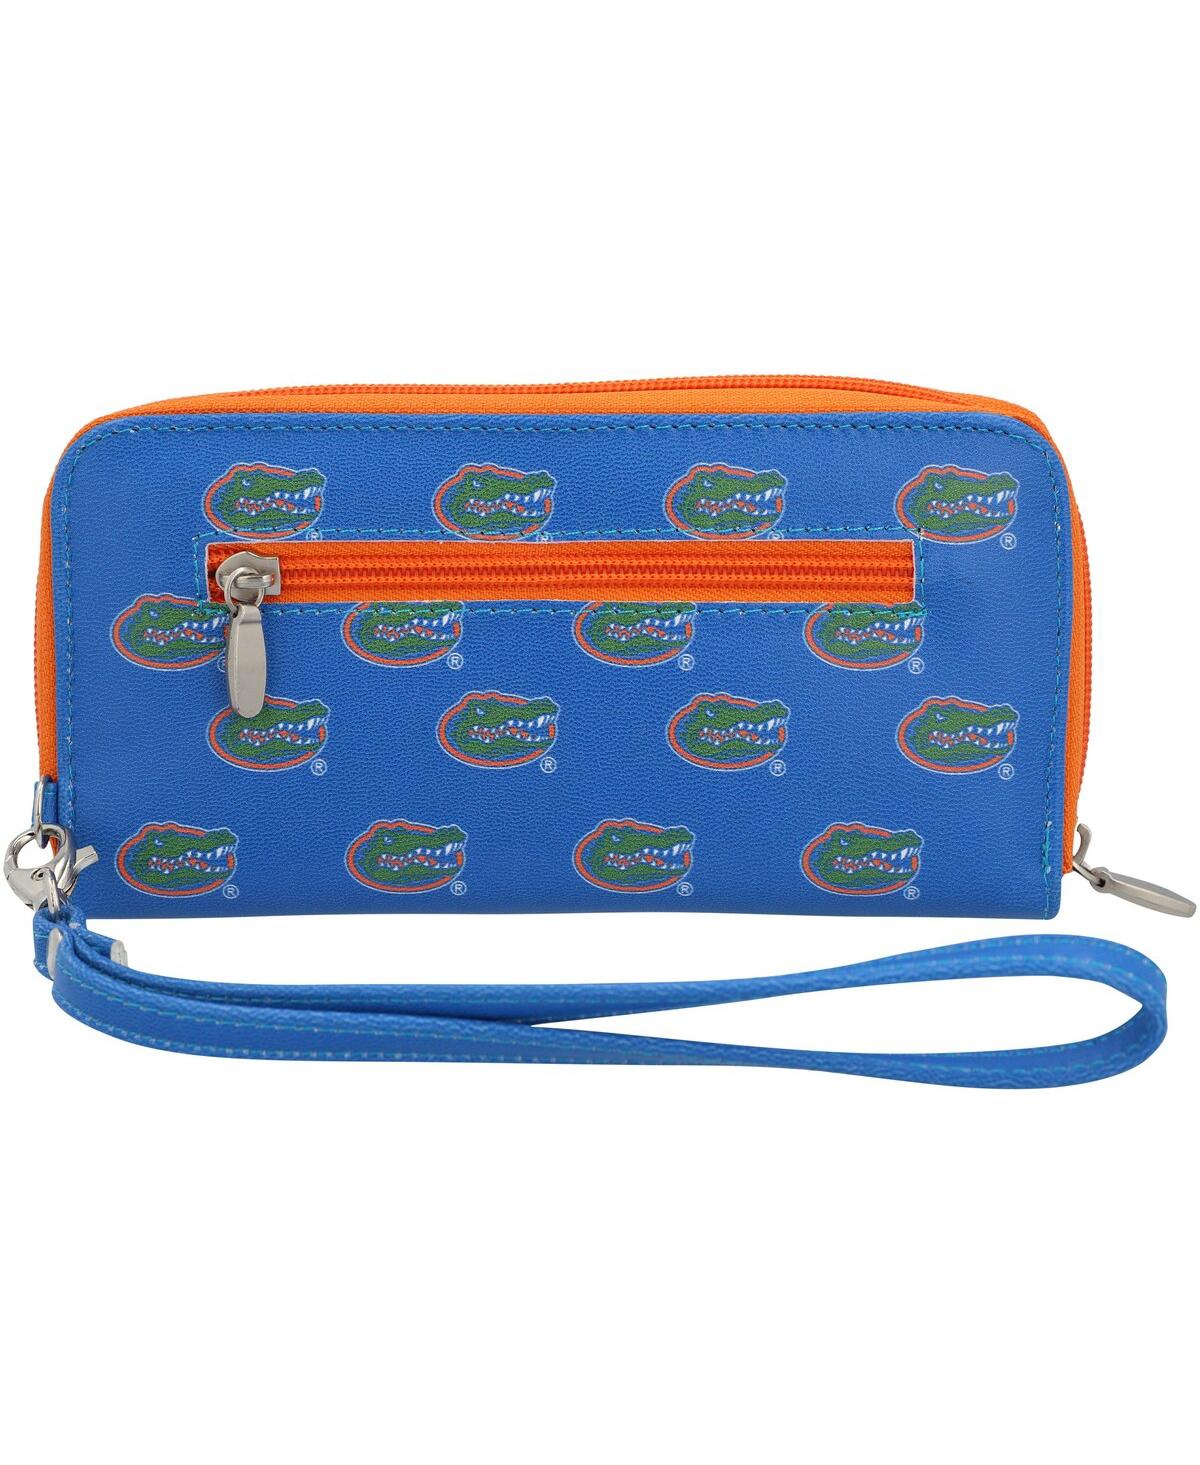 Women's Florida Gators Zip-Around Wristlet Wallet - Blue